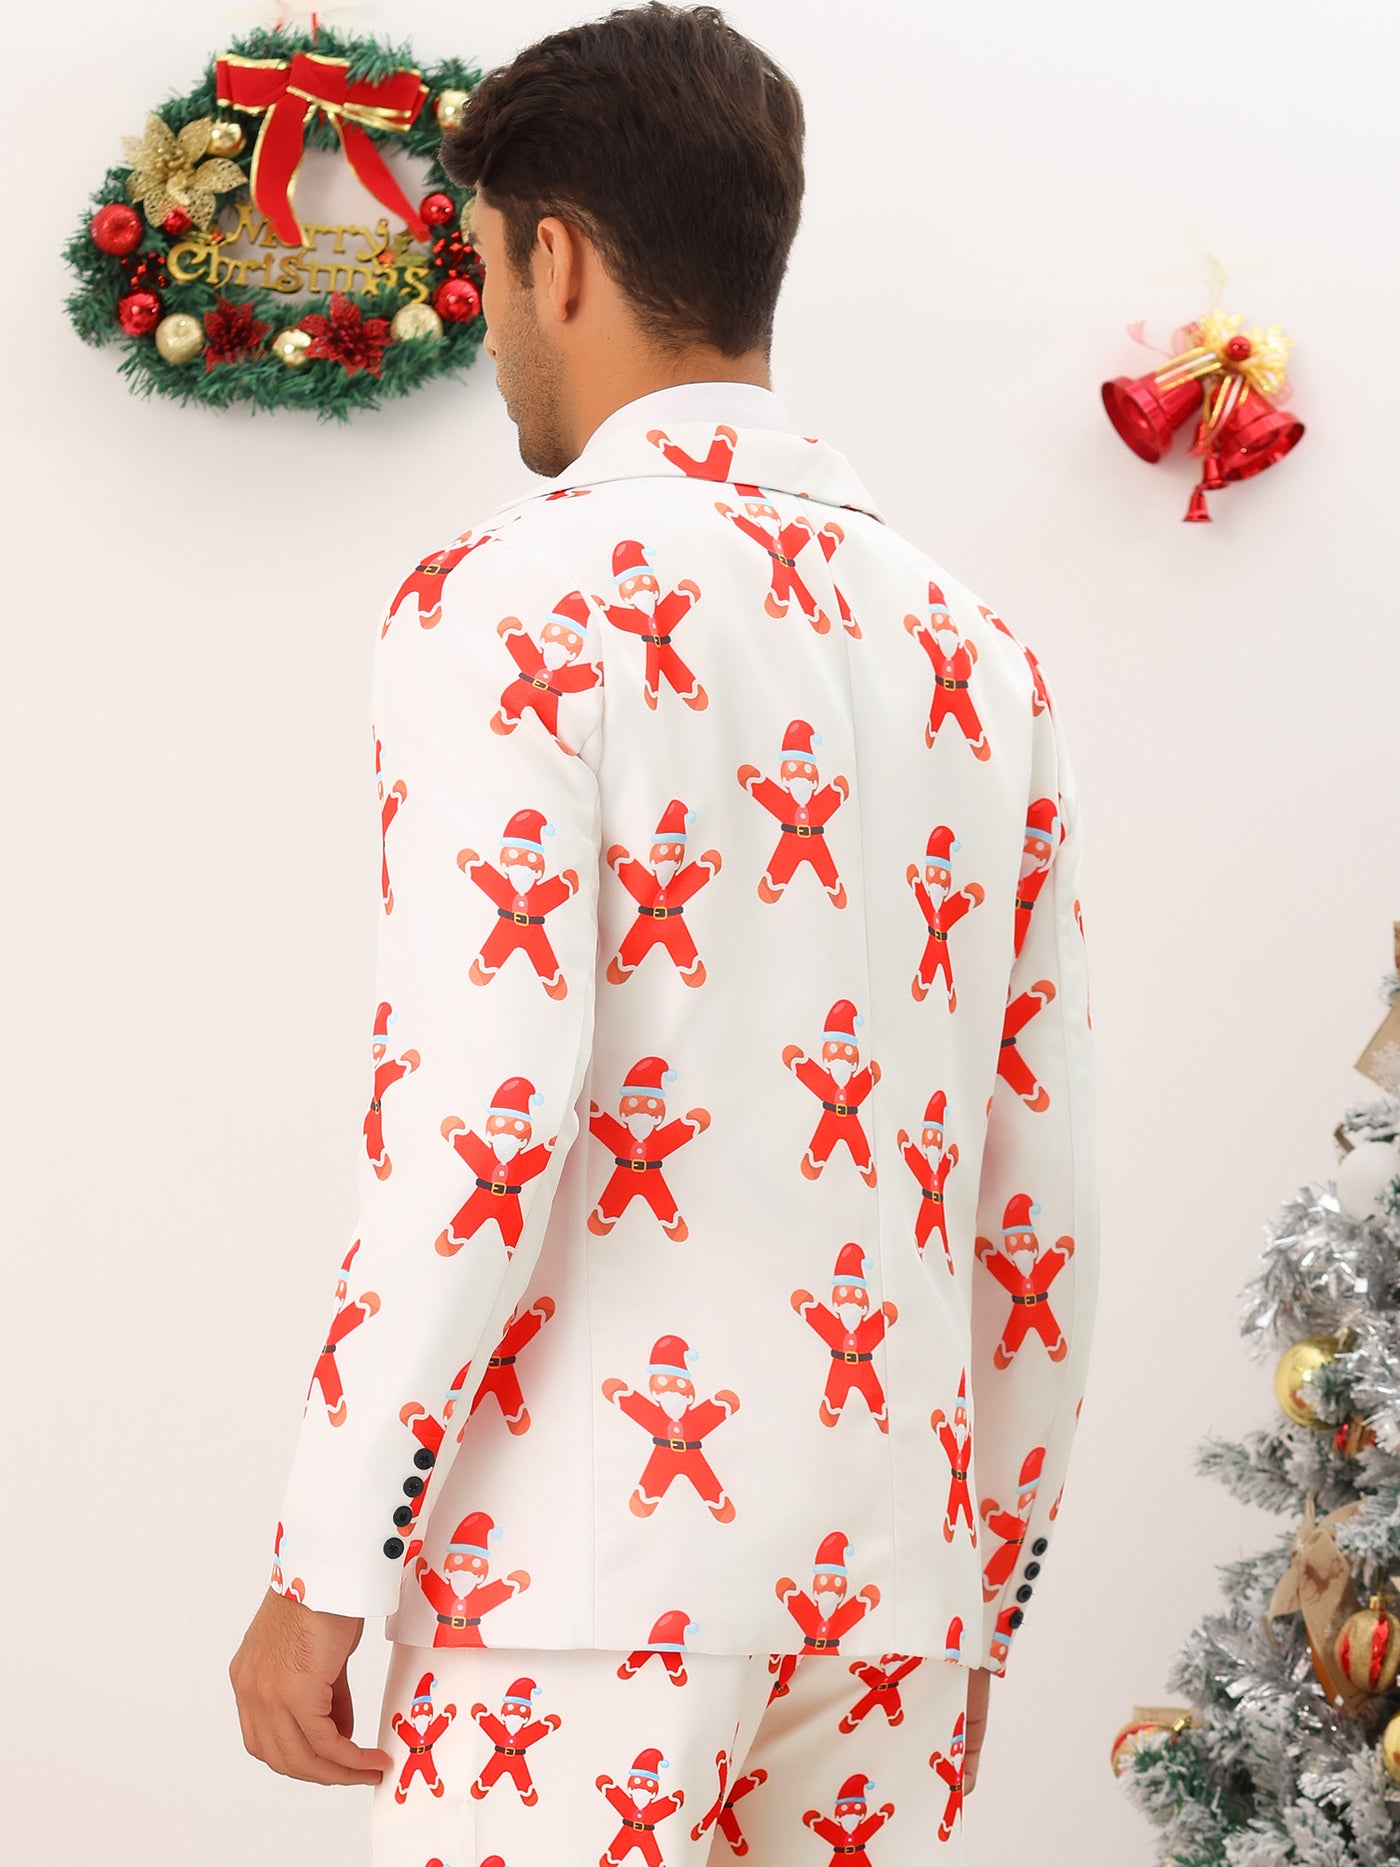 Bublédon Christmas Printed Blazer for Men's Notch Lapel Costume Sports Coat